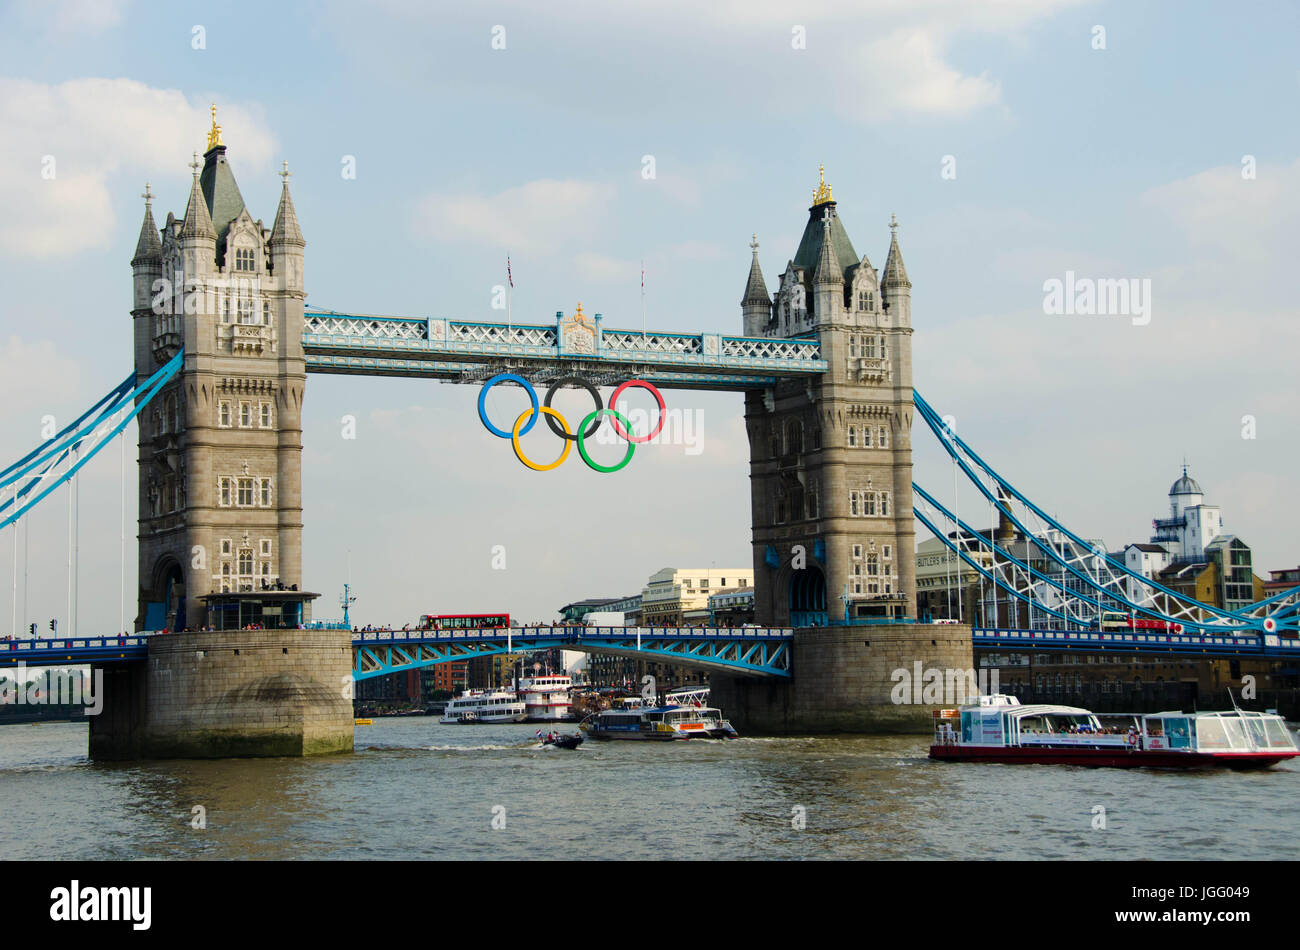 Olympic sign hanging on the London bridge Stock Photo